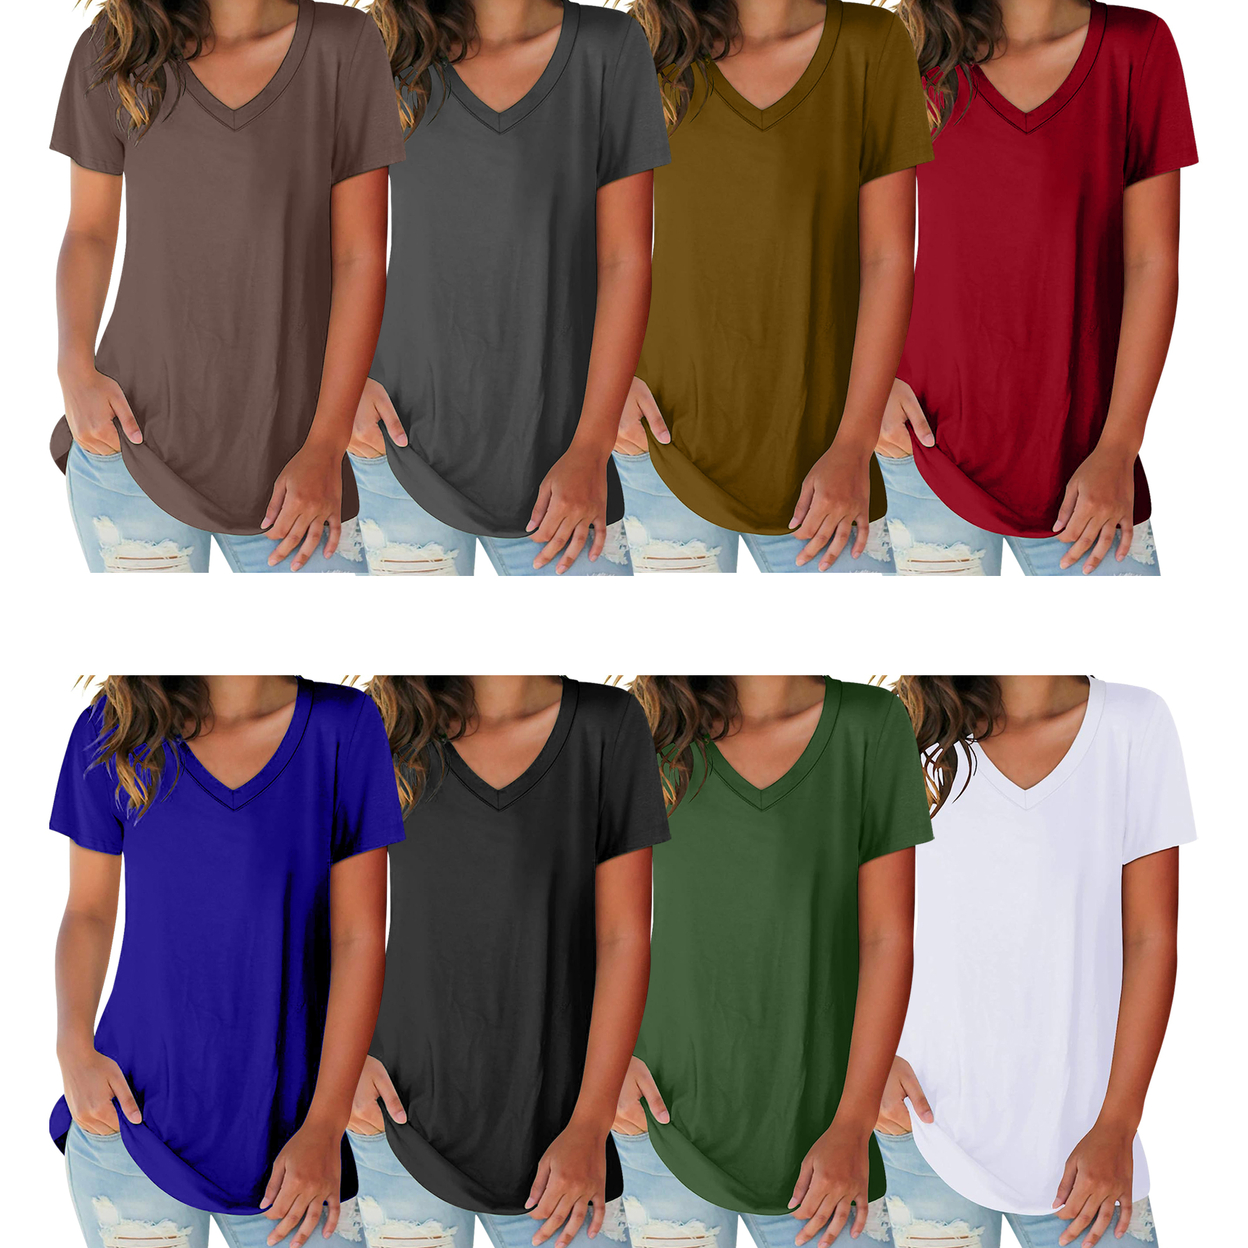 3-Pack: Women's Ultra Soft Smooth Cotton Blend Basic V-Neck Short Sleeve Shirts - Black, Navy, Green, Small